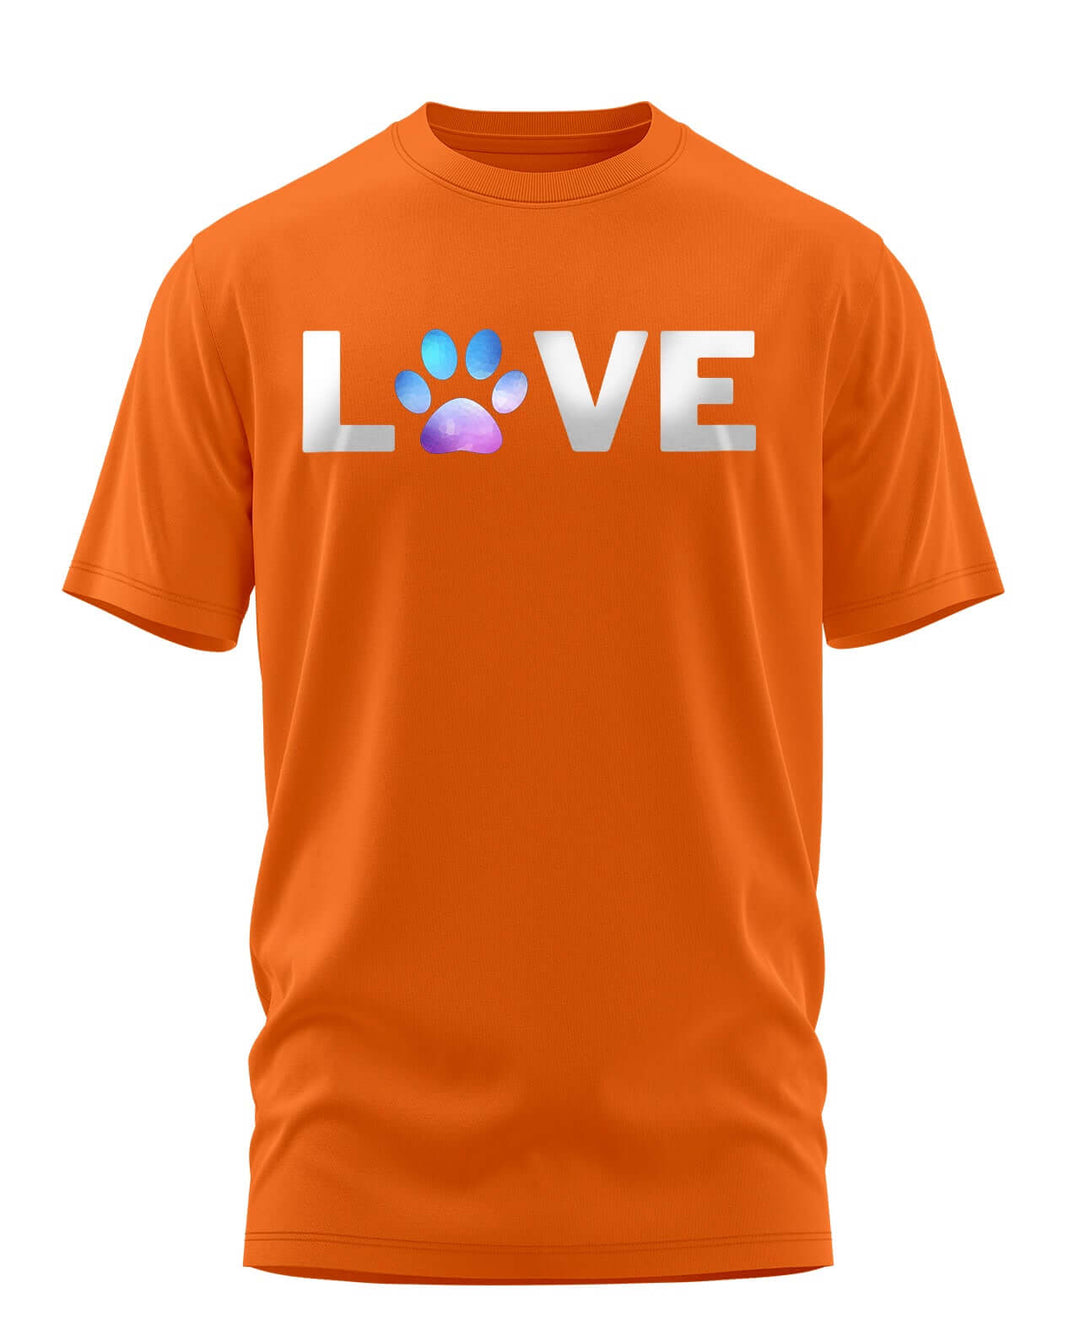 Paw's love T-Shirt